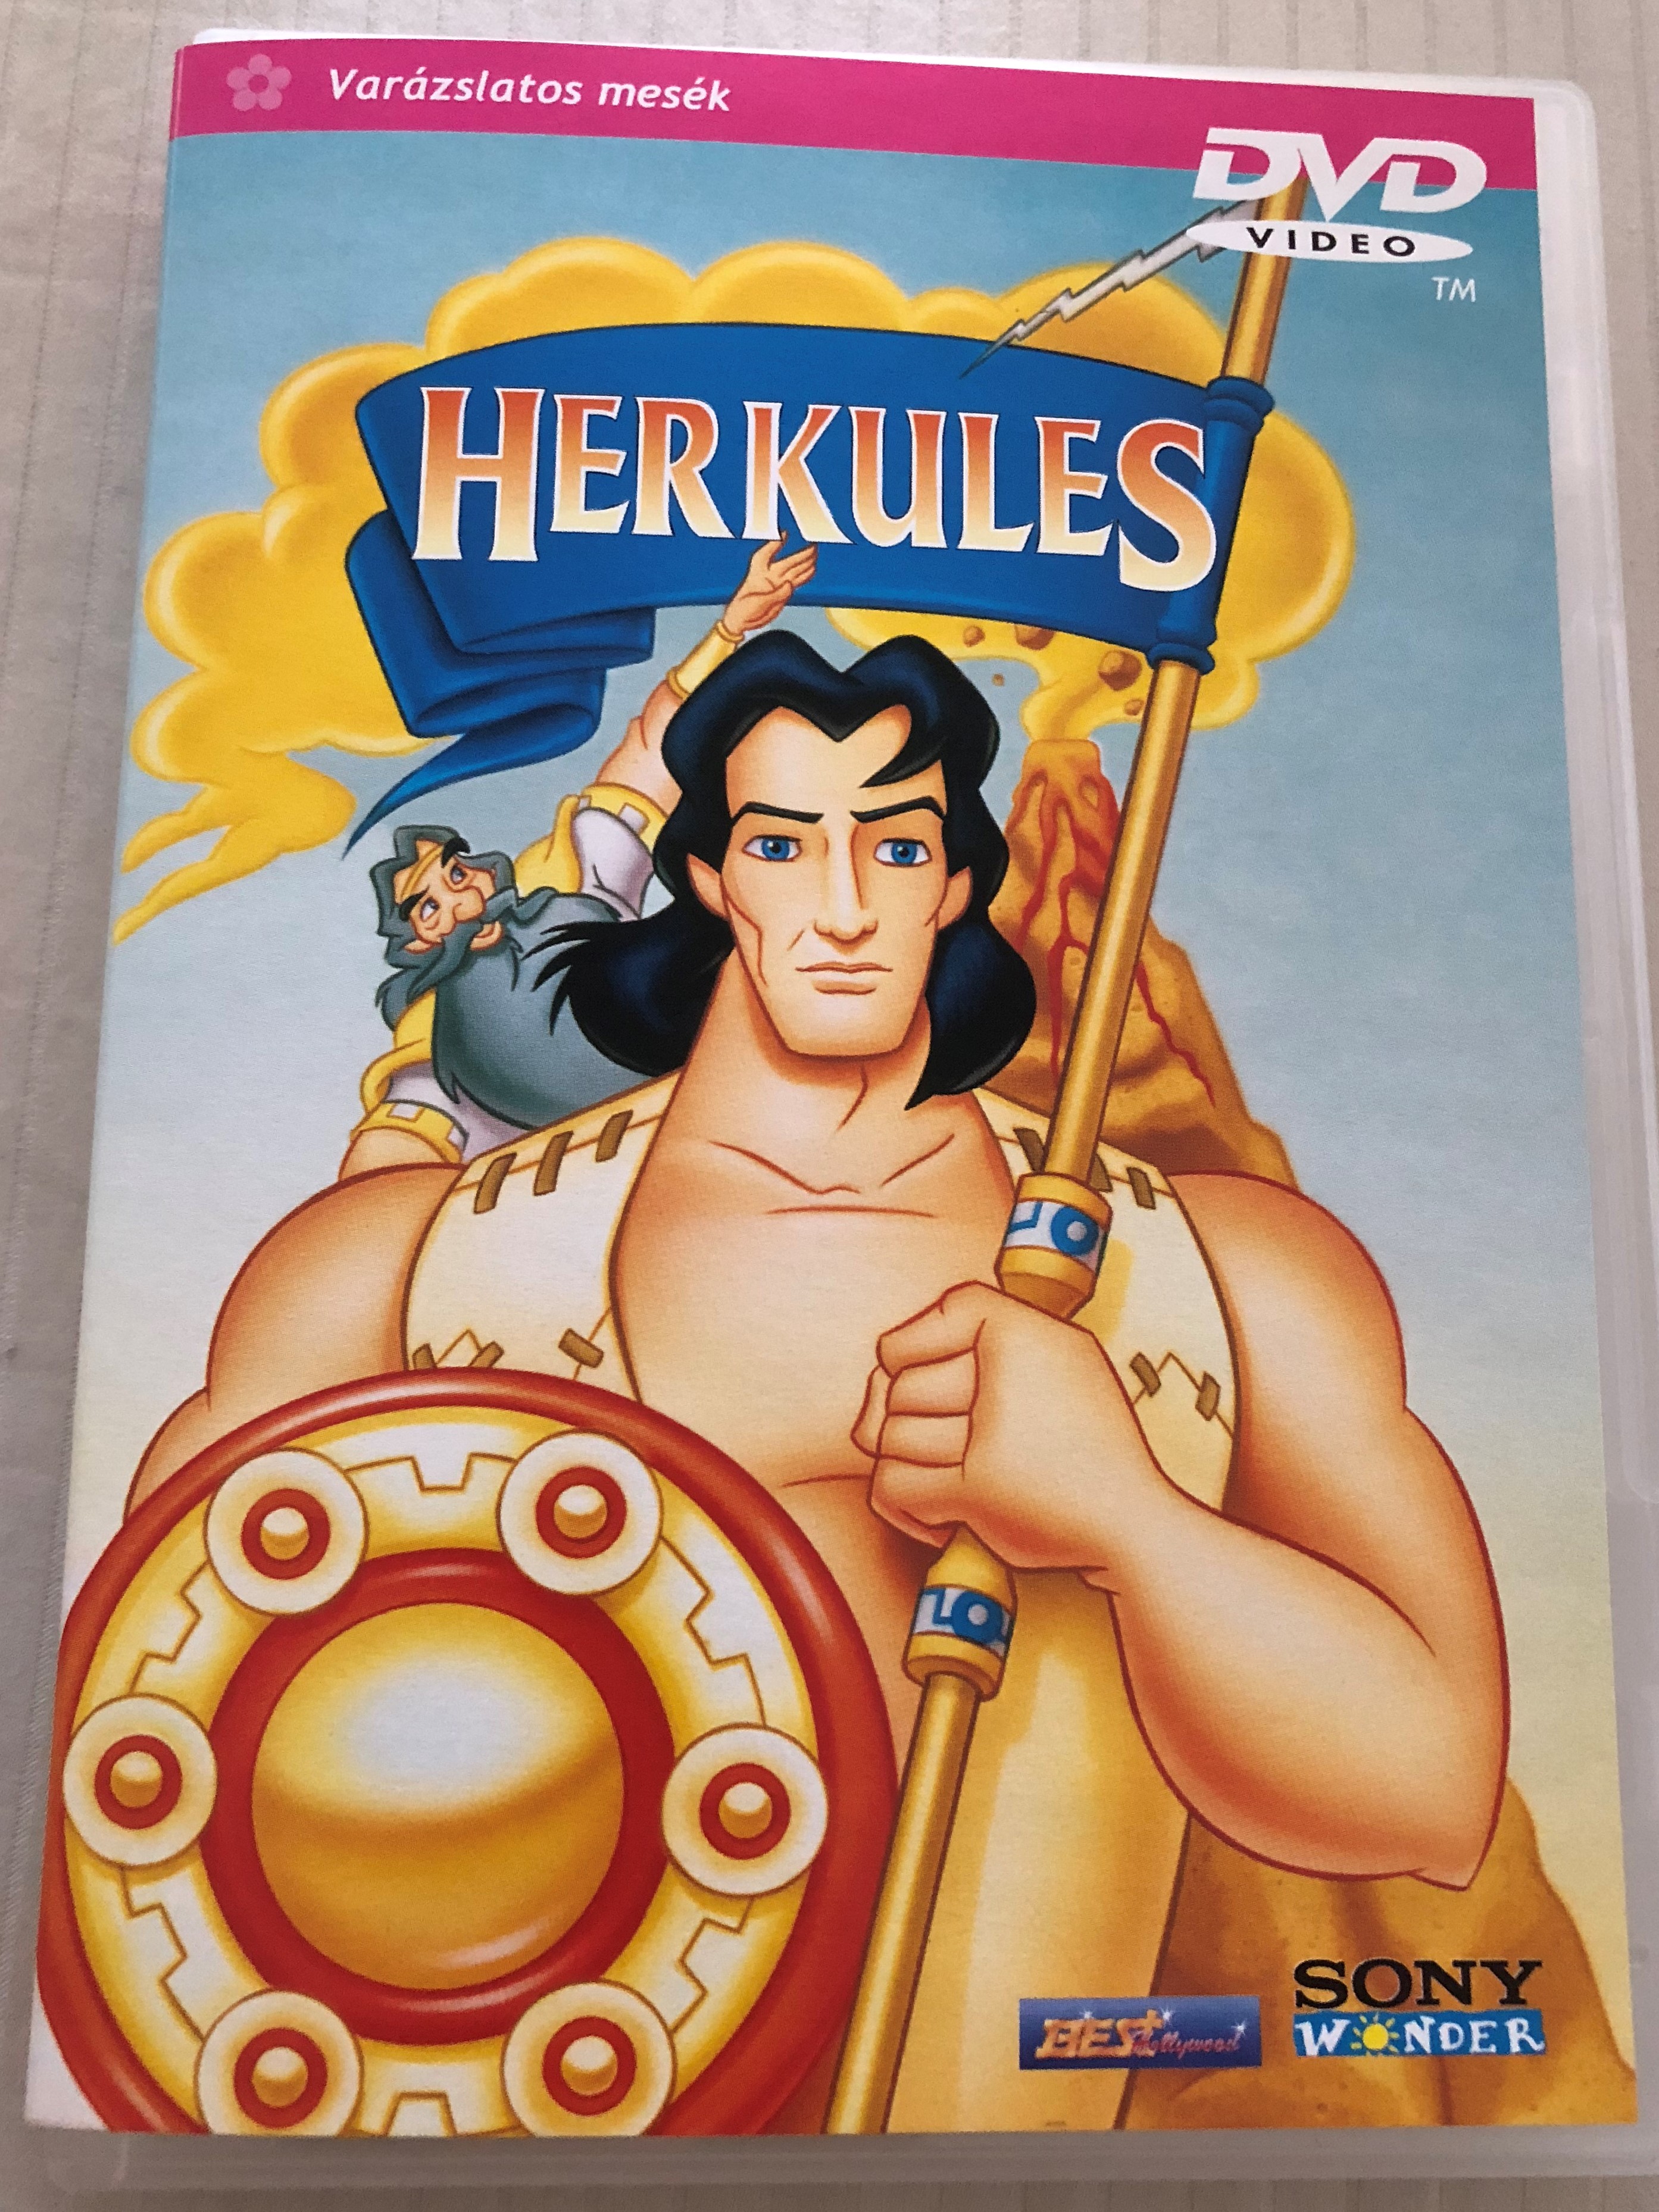 Hercules DVD 1996 Herkules / Sony Wonder / Directed by Diane Eskenazi /  Starring: Mary Kay Bergman, Cam Clarke, Jeannie Elias - bibleinmylanguage